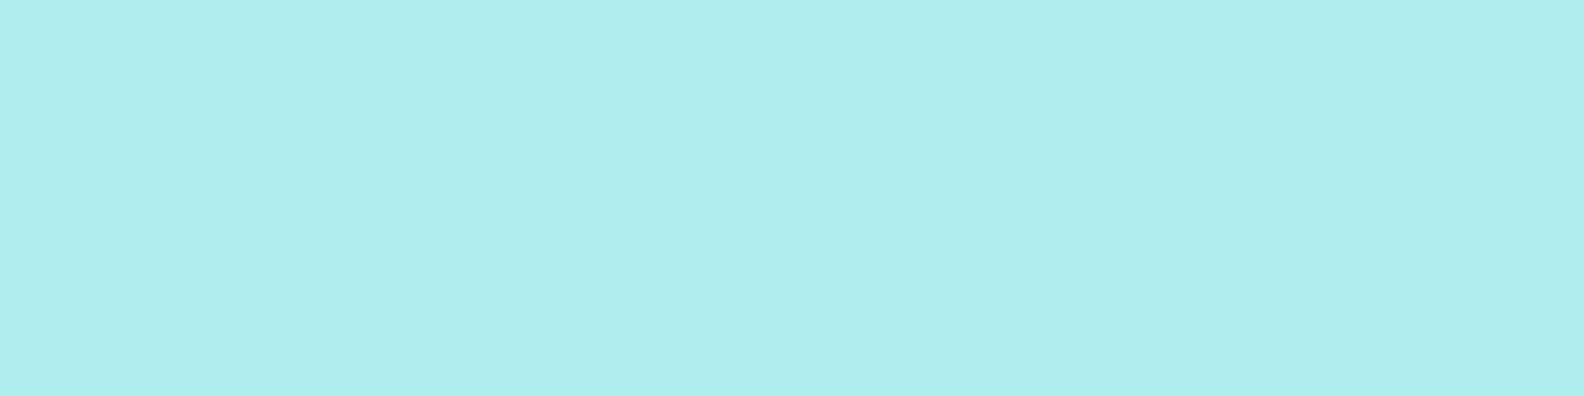 1584x396 Pale Blue Solid Color Background